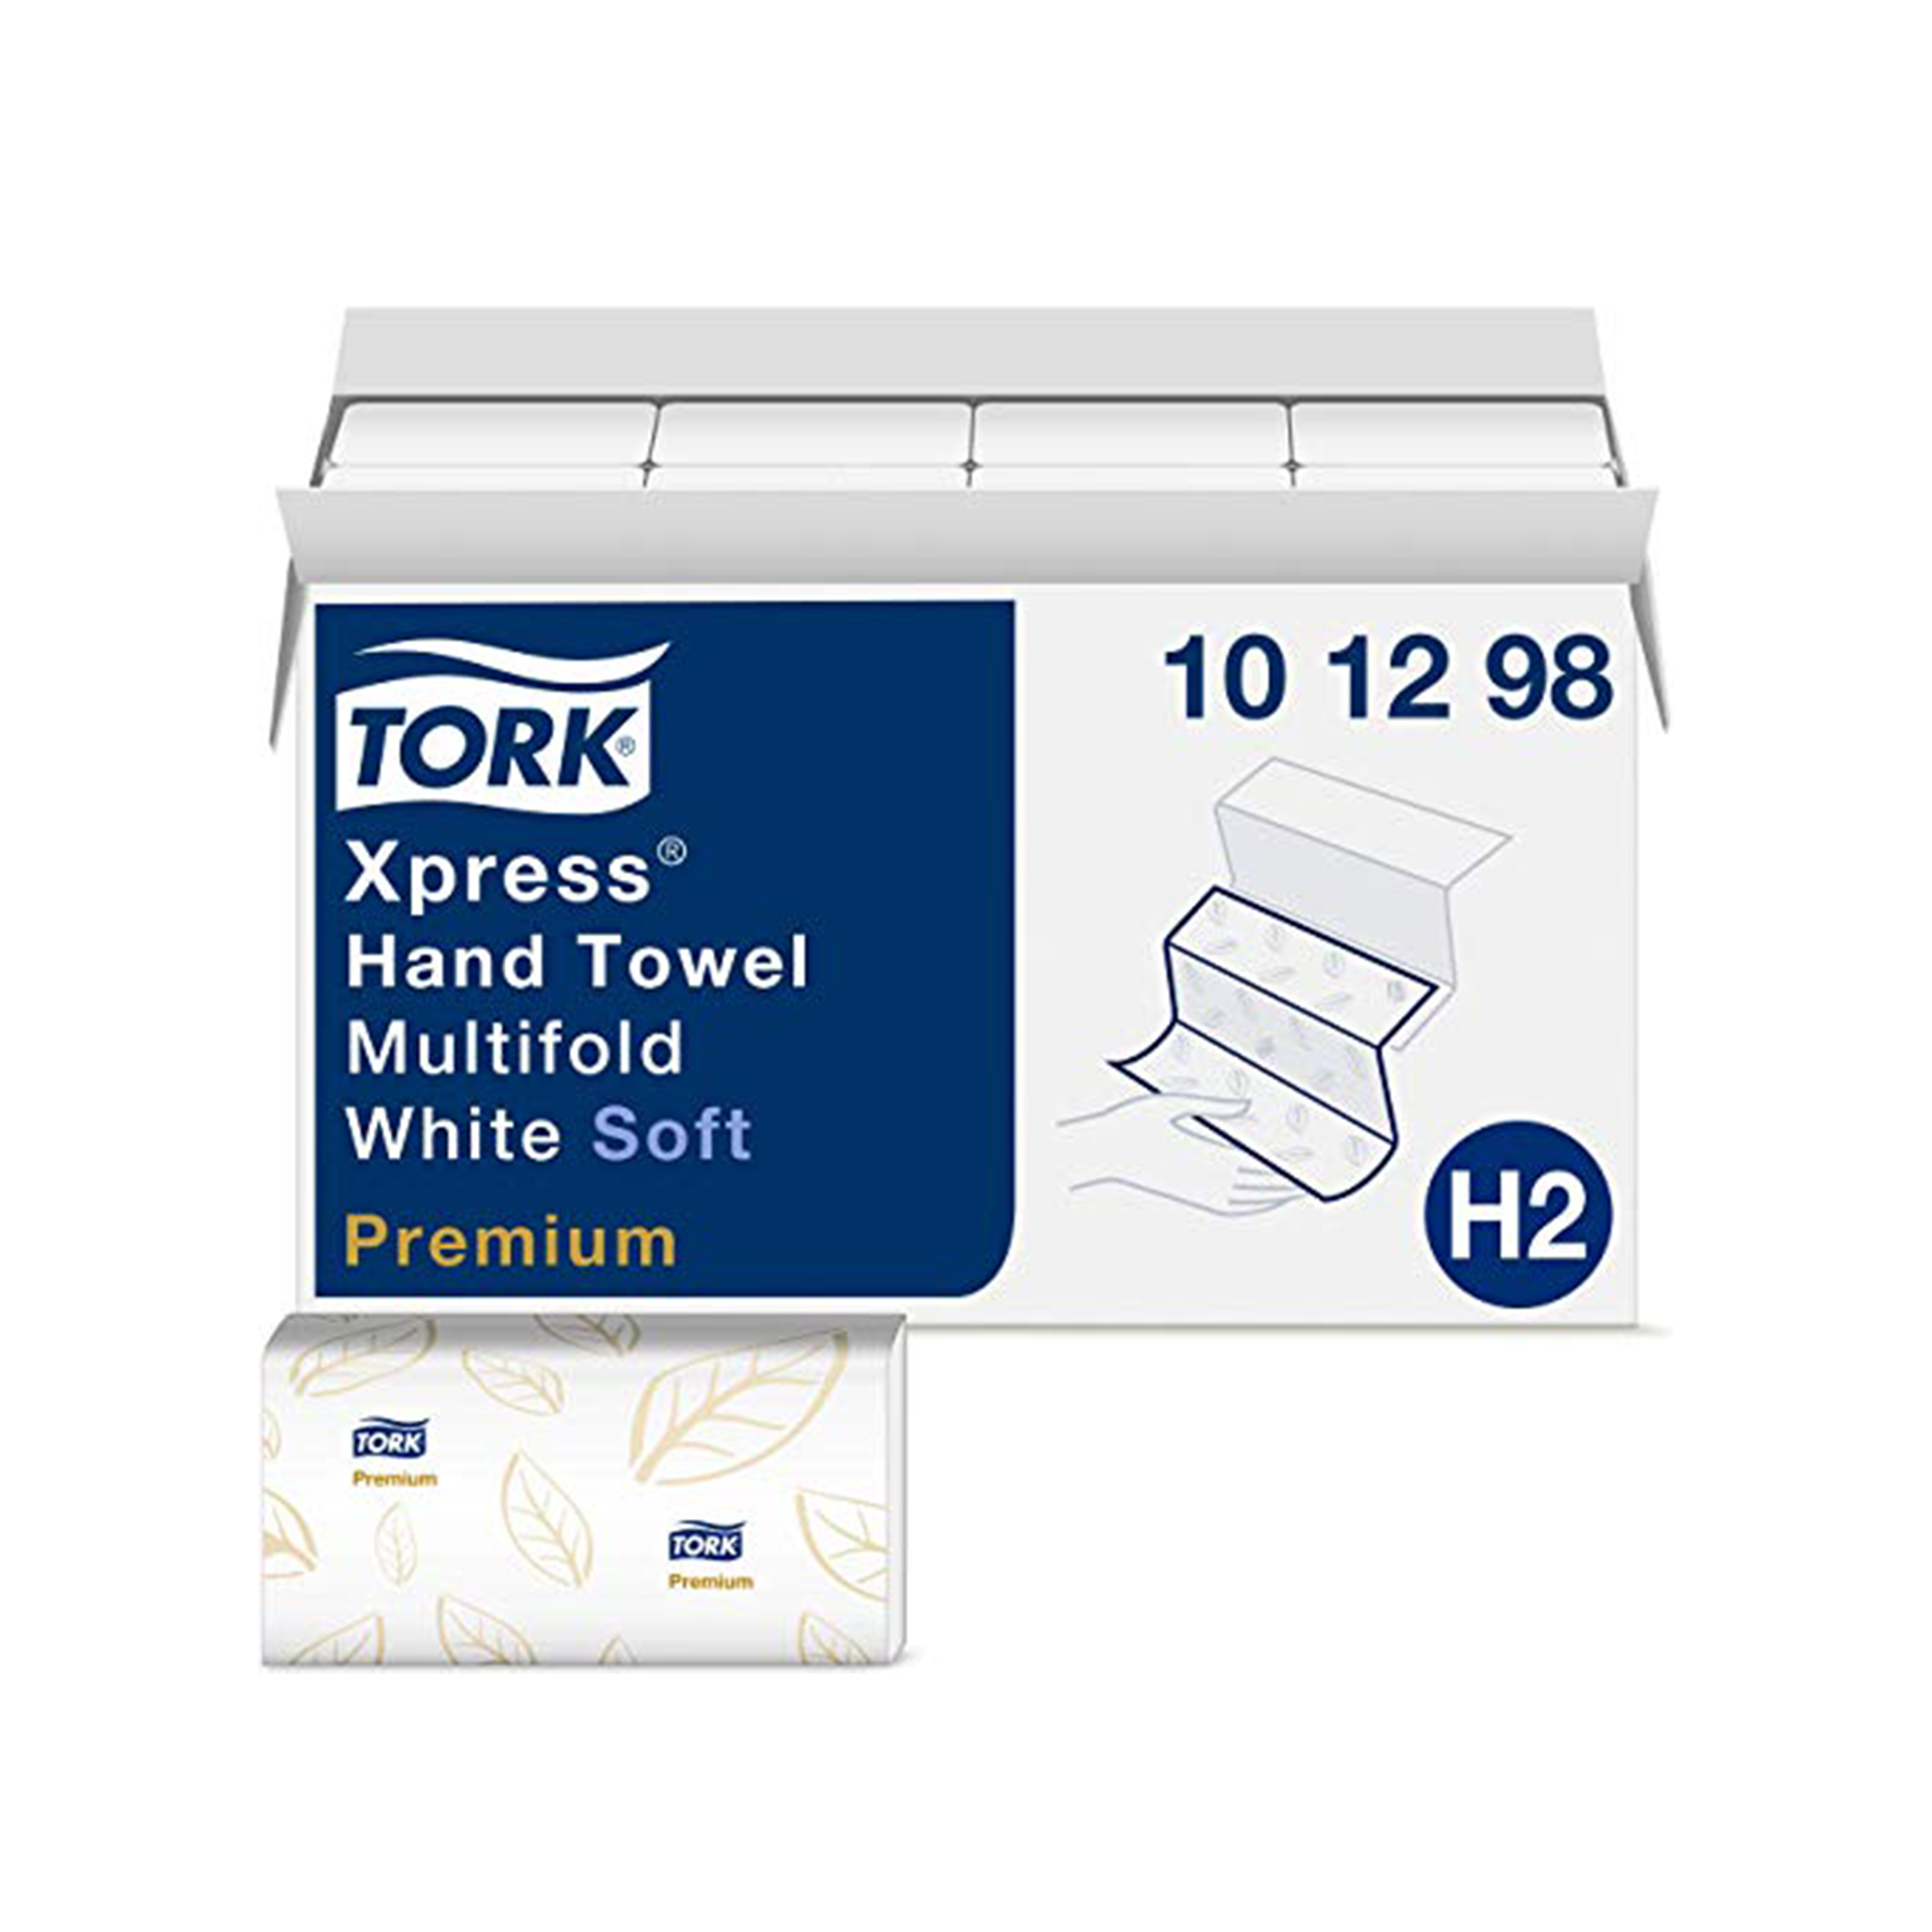 Tork 101298 Premium Extra Soft Xpress Multifold Hand Towel, White